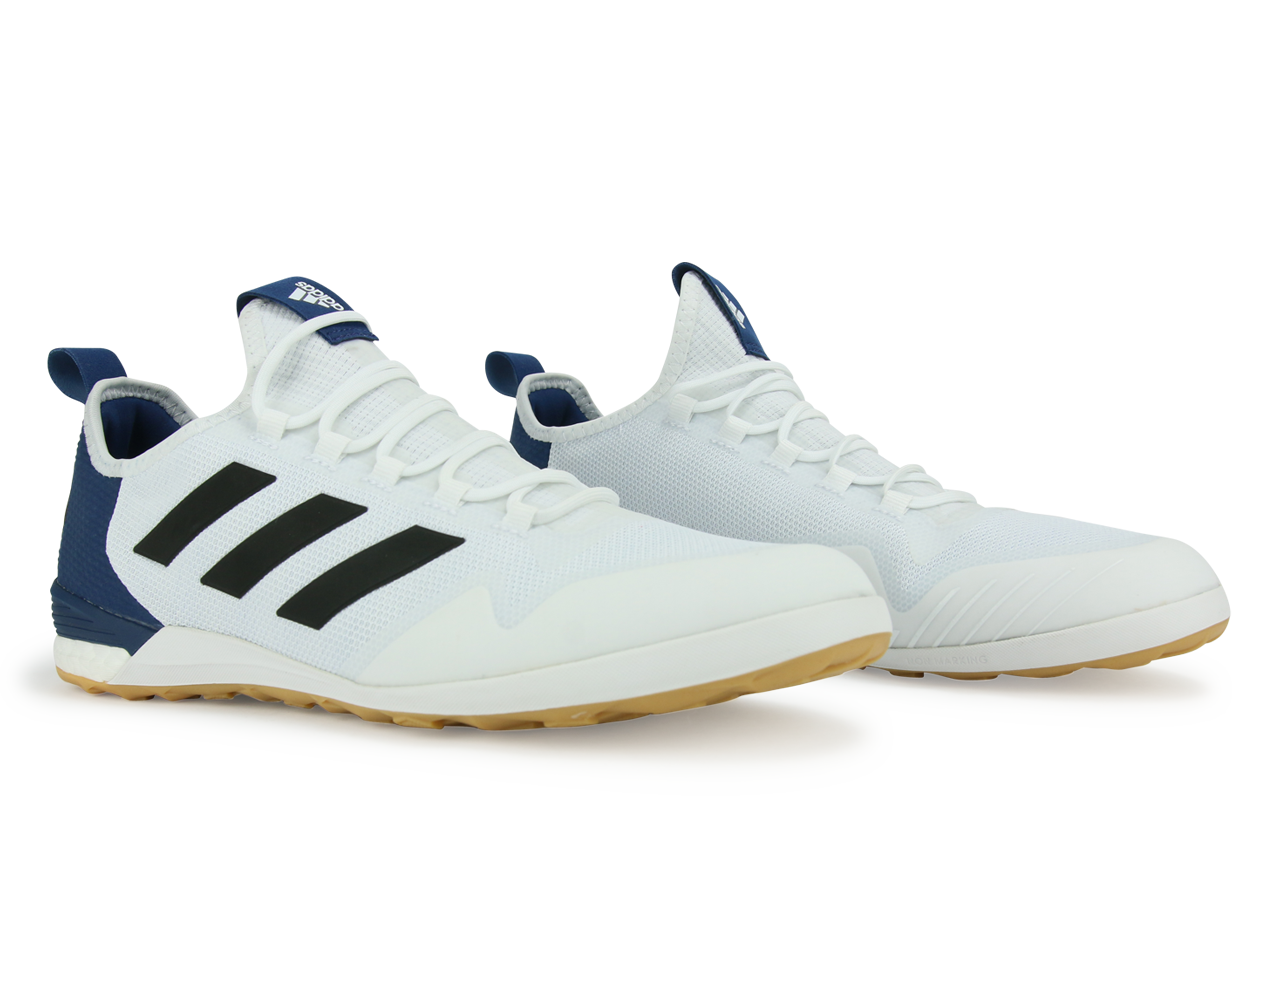 Enriquecimiento Competitivo Touhou adidas Men's ACE Tango 17.1 Indoor Soccer Shoes Running White/Black –  Azteca Soccer